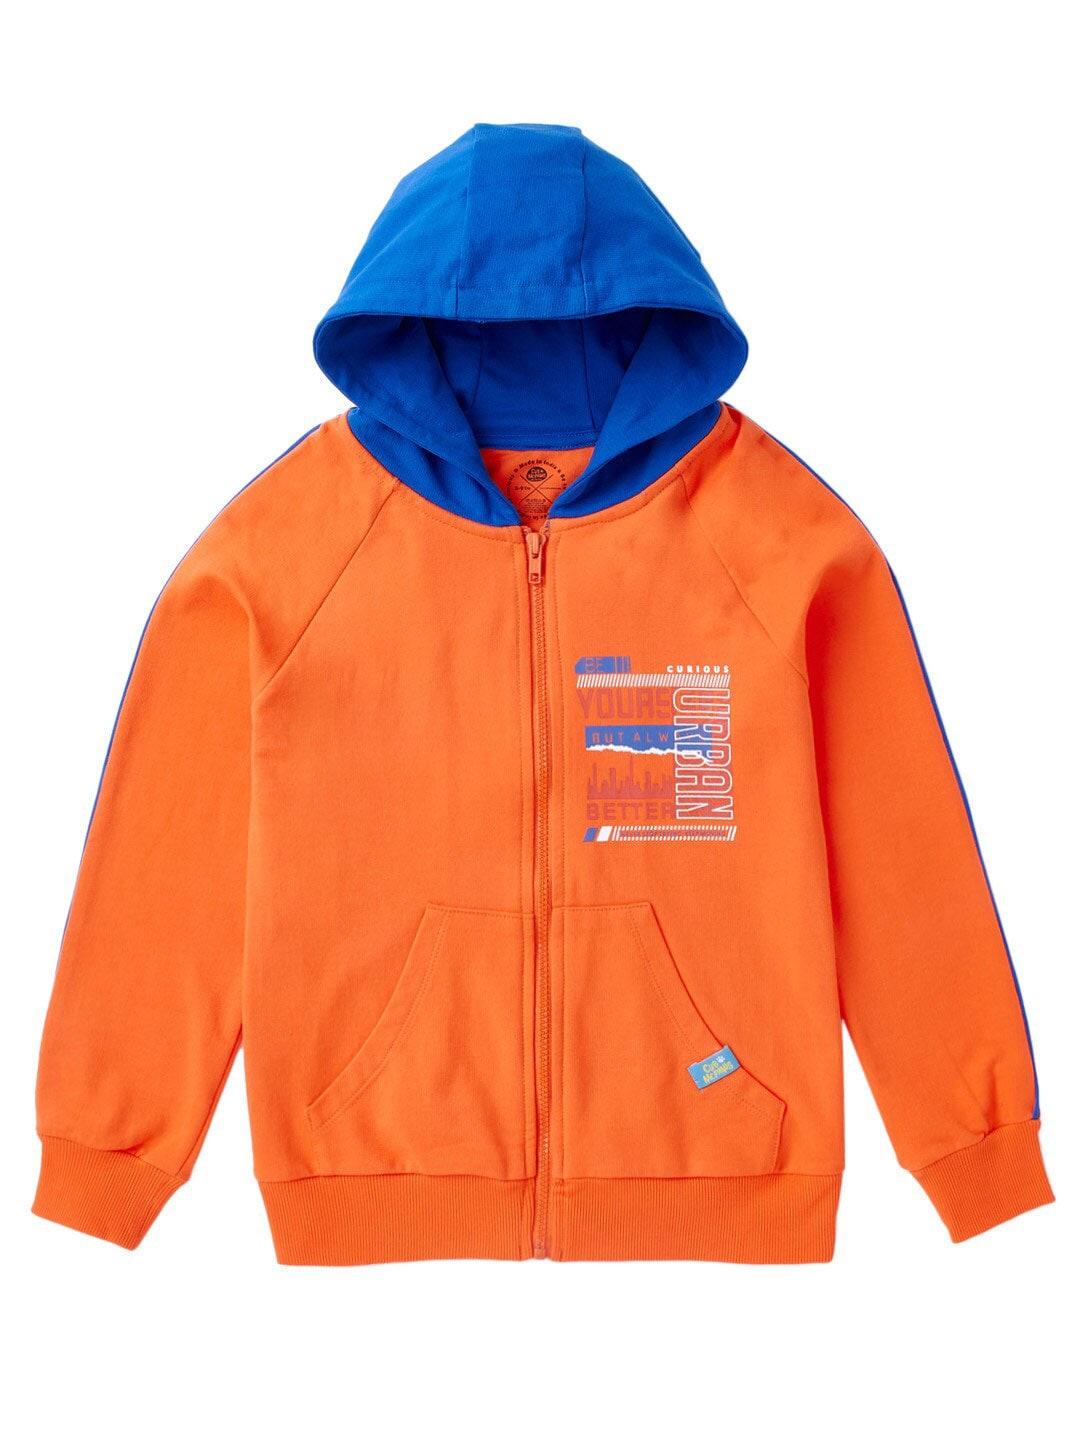 Cub McPaws Boys Orange Hooded Sweatshirt